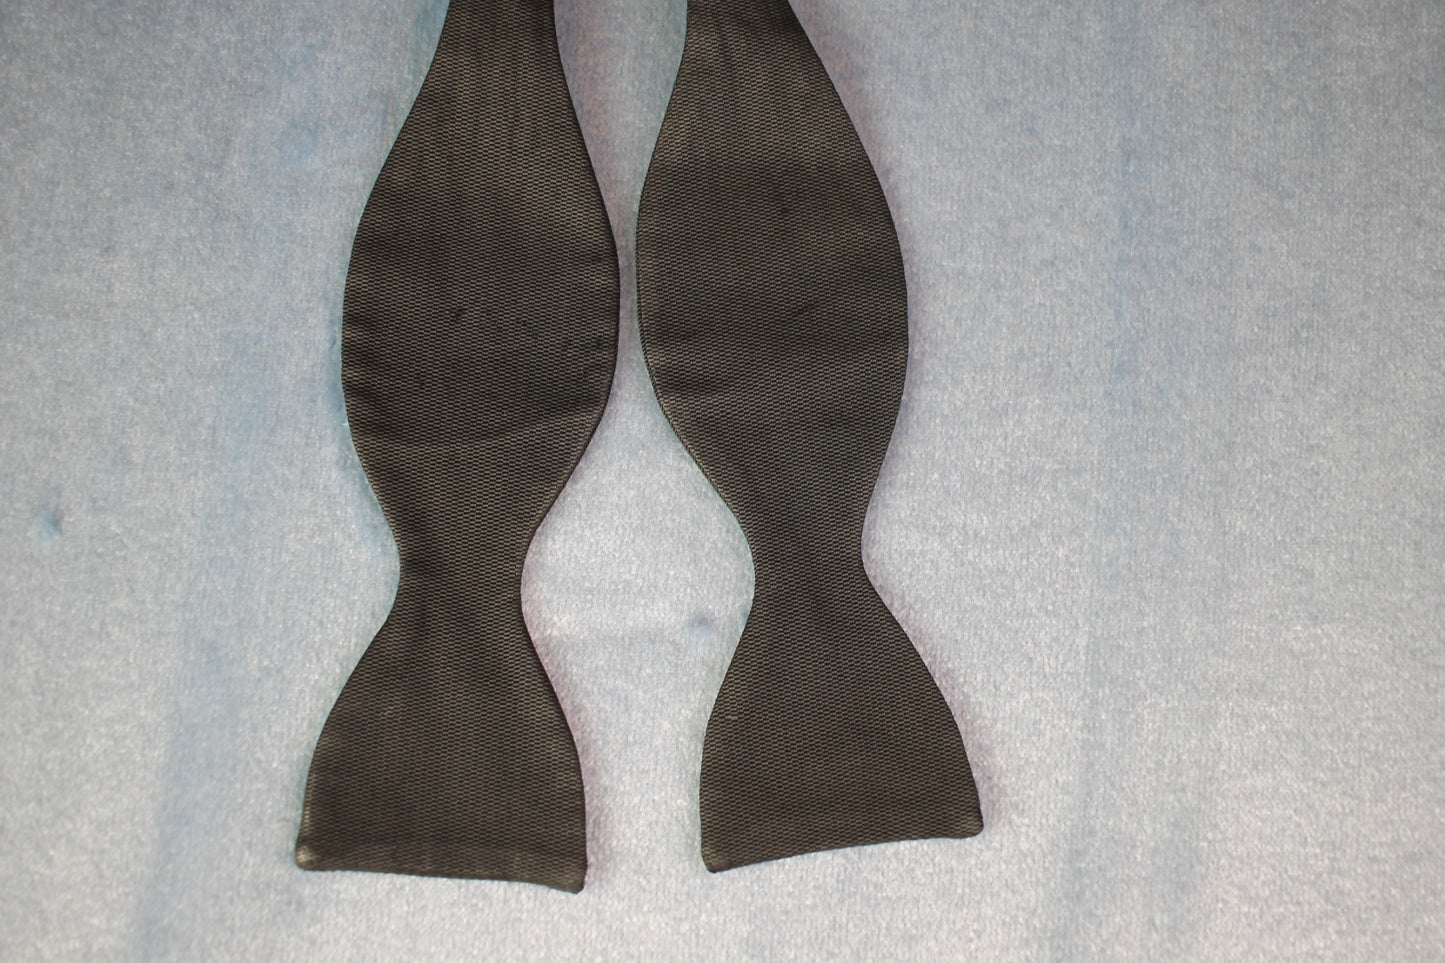 Vintage self tie thistle end classic black bow tie